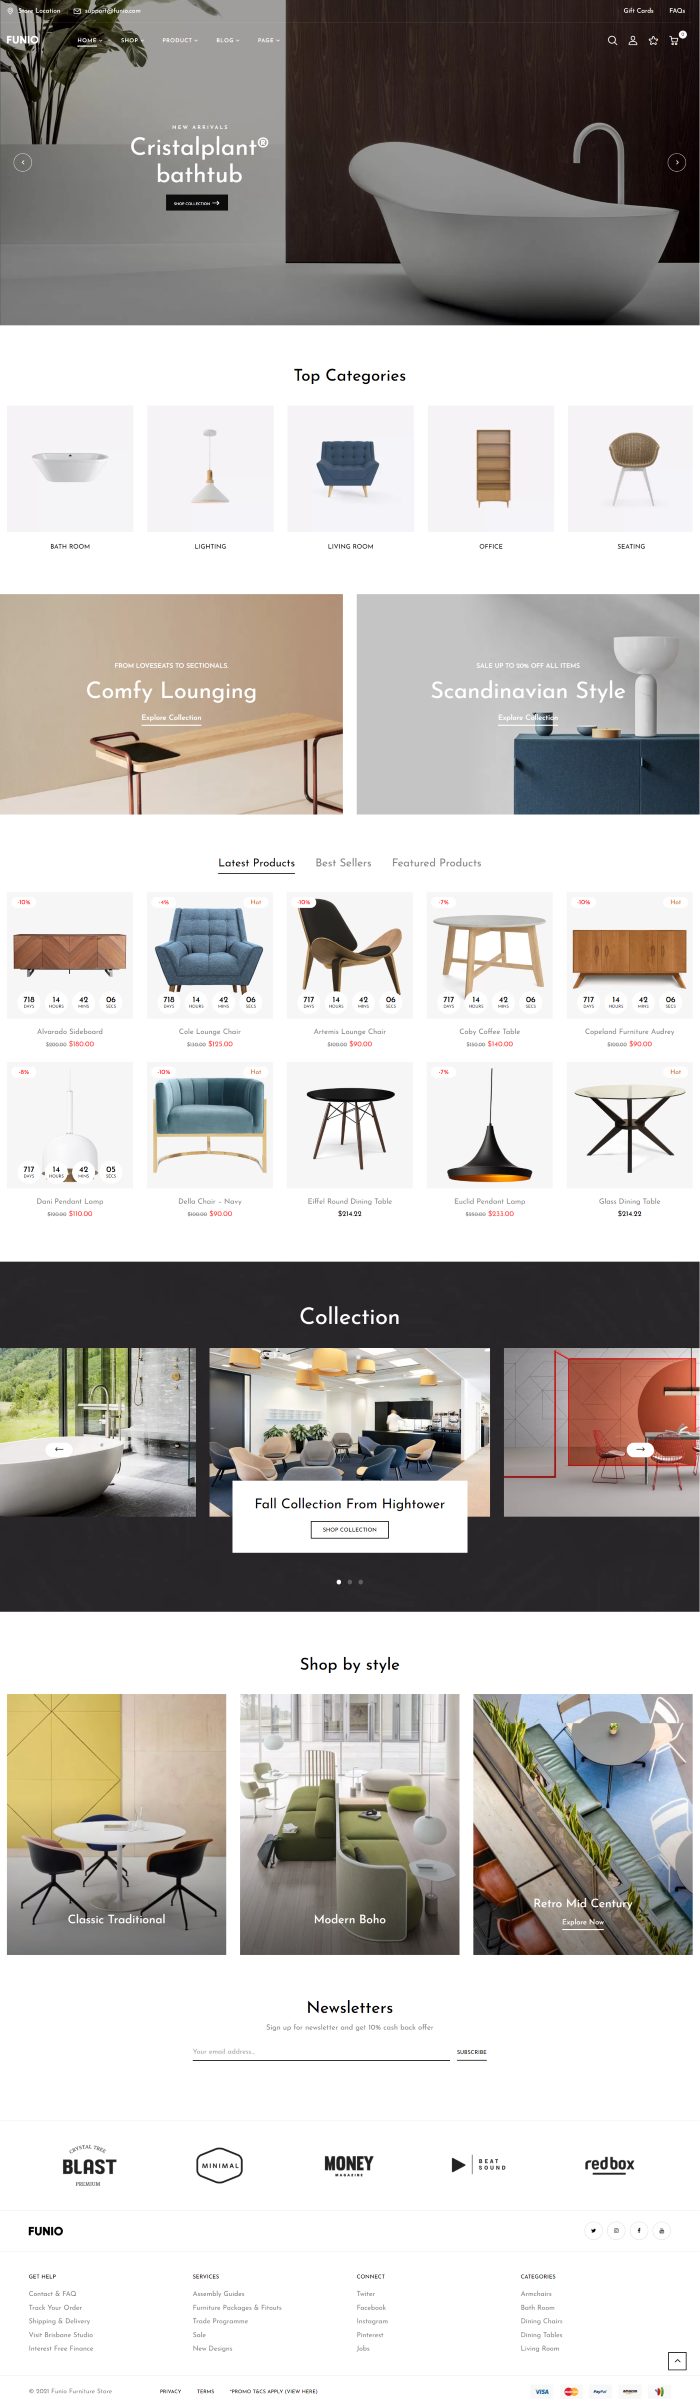 Mẫu website thiết kế nội thất - funio home 1